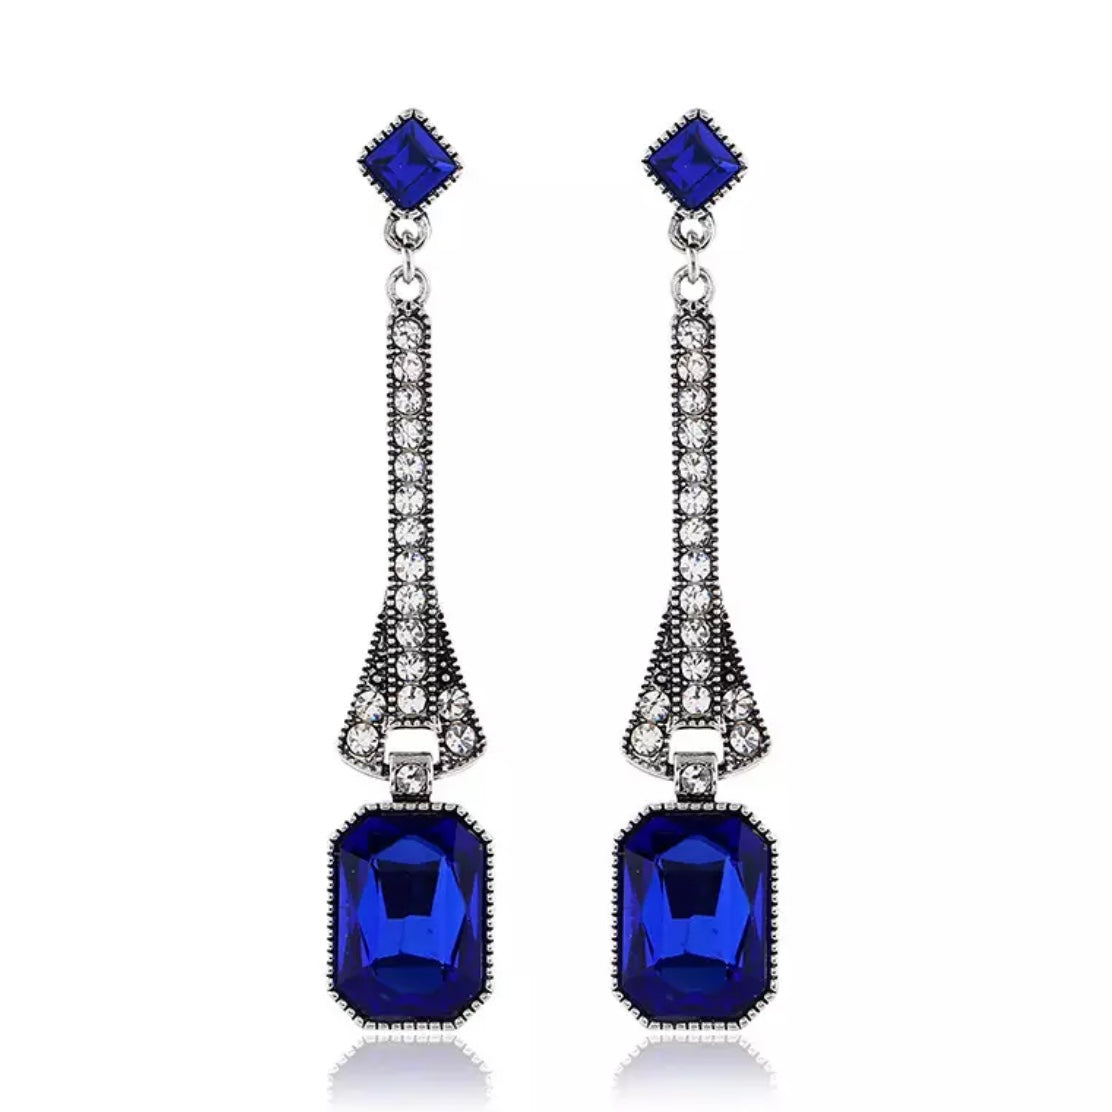 Great Gatsby 1920's Crystal Rhinestone Art Deco Drop Earrings - Royal Blue (Style 18)